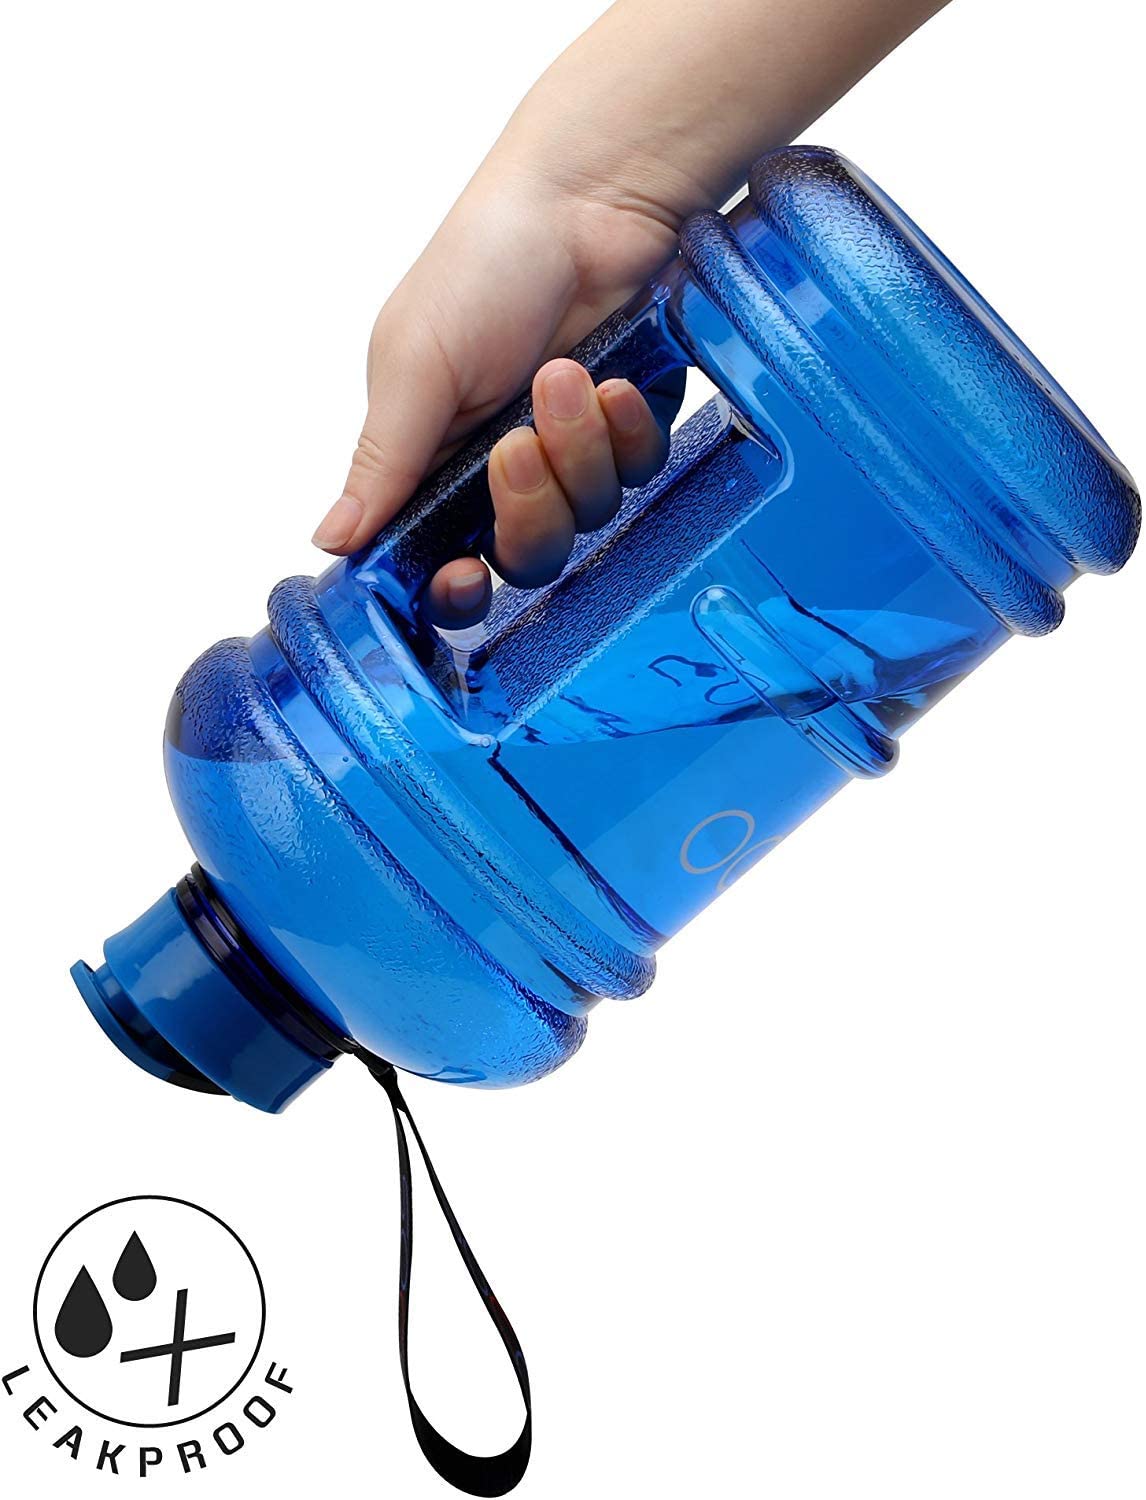 FUNUS Big Water Bottle BPA Free Half Gallon Water Bottle Hydro Jug